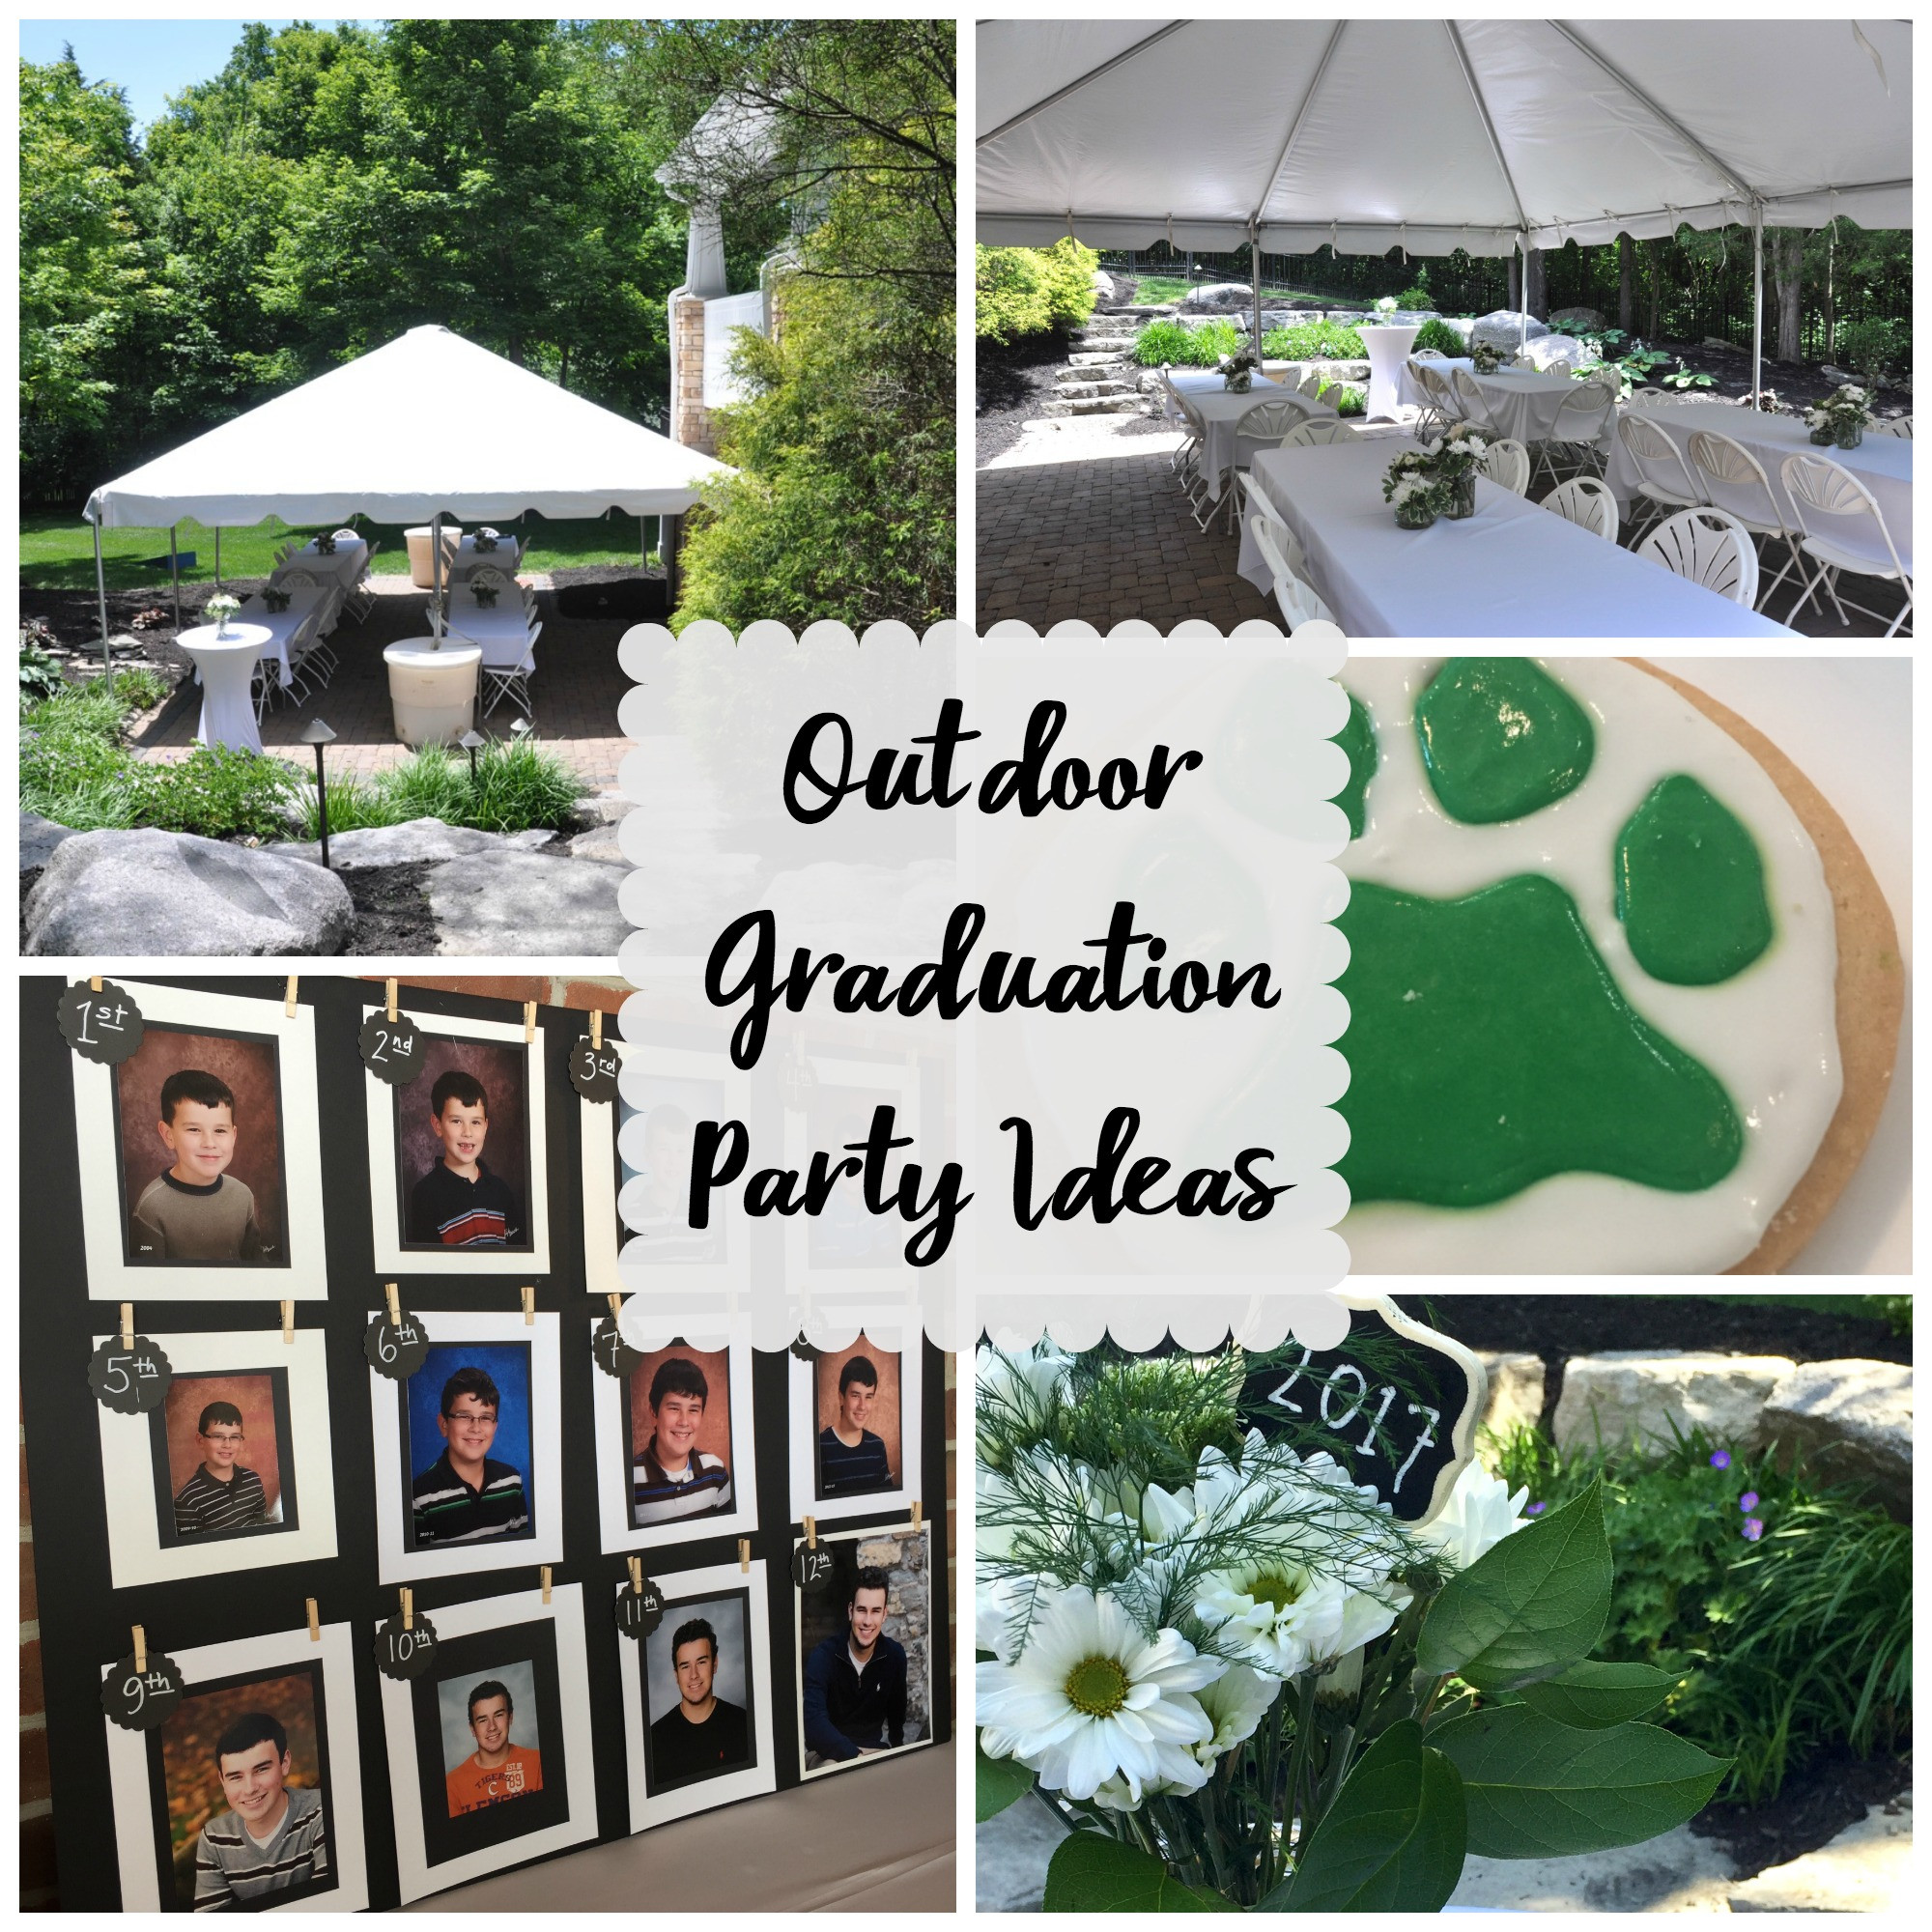 Free High School Graduation Backyard Party Ideas
 Outdoor Graduation Party Evolution of Style